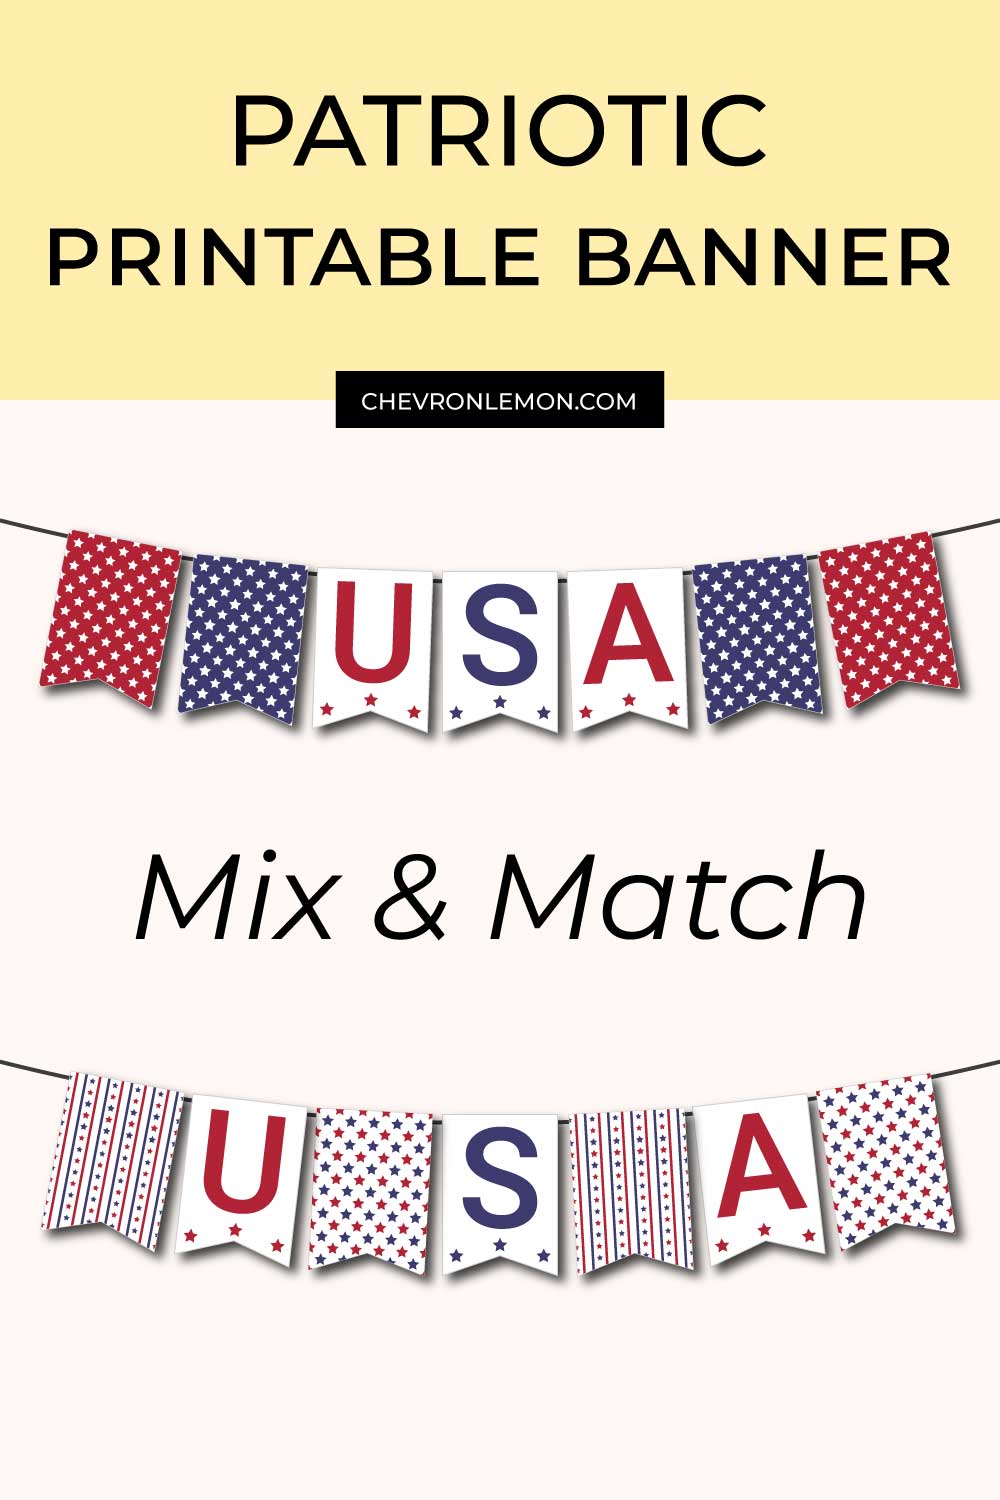 Printable USA patriotic banner pin